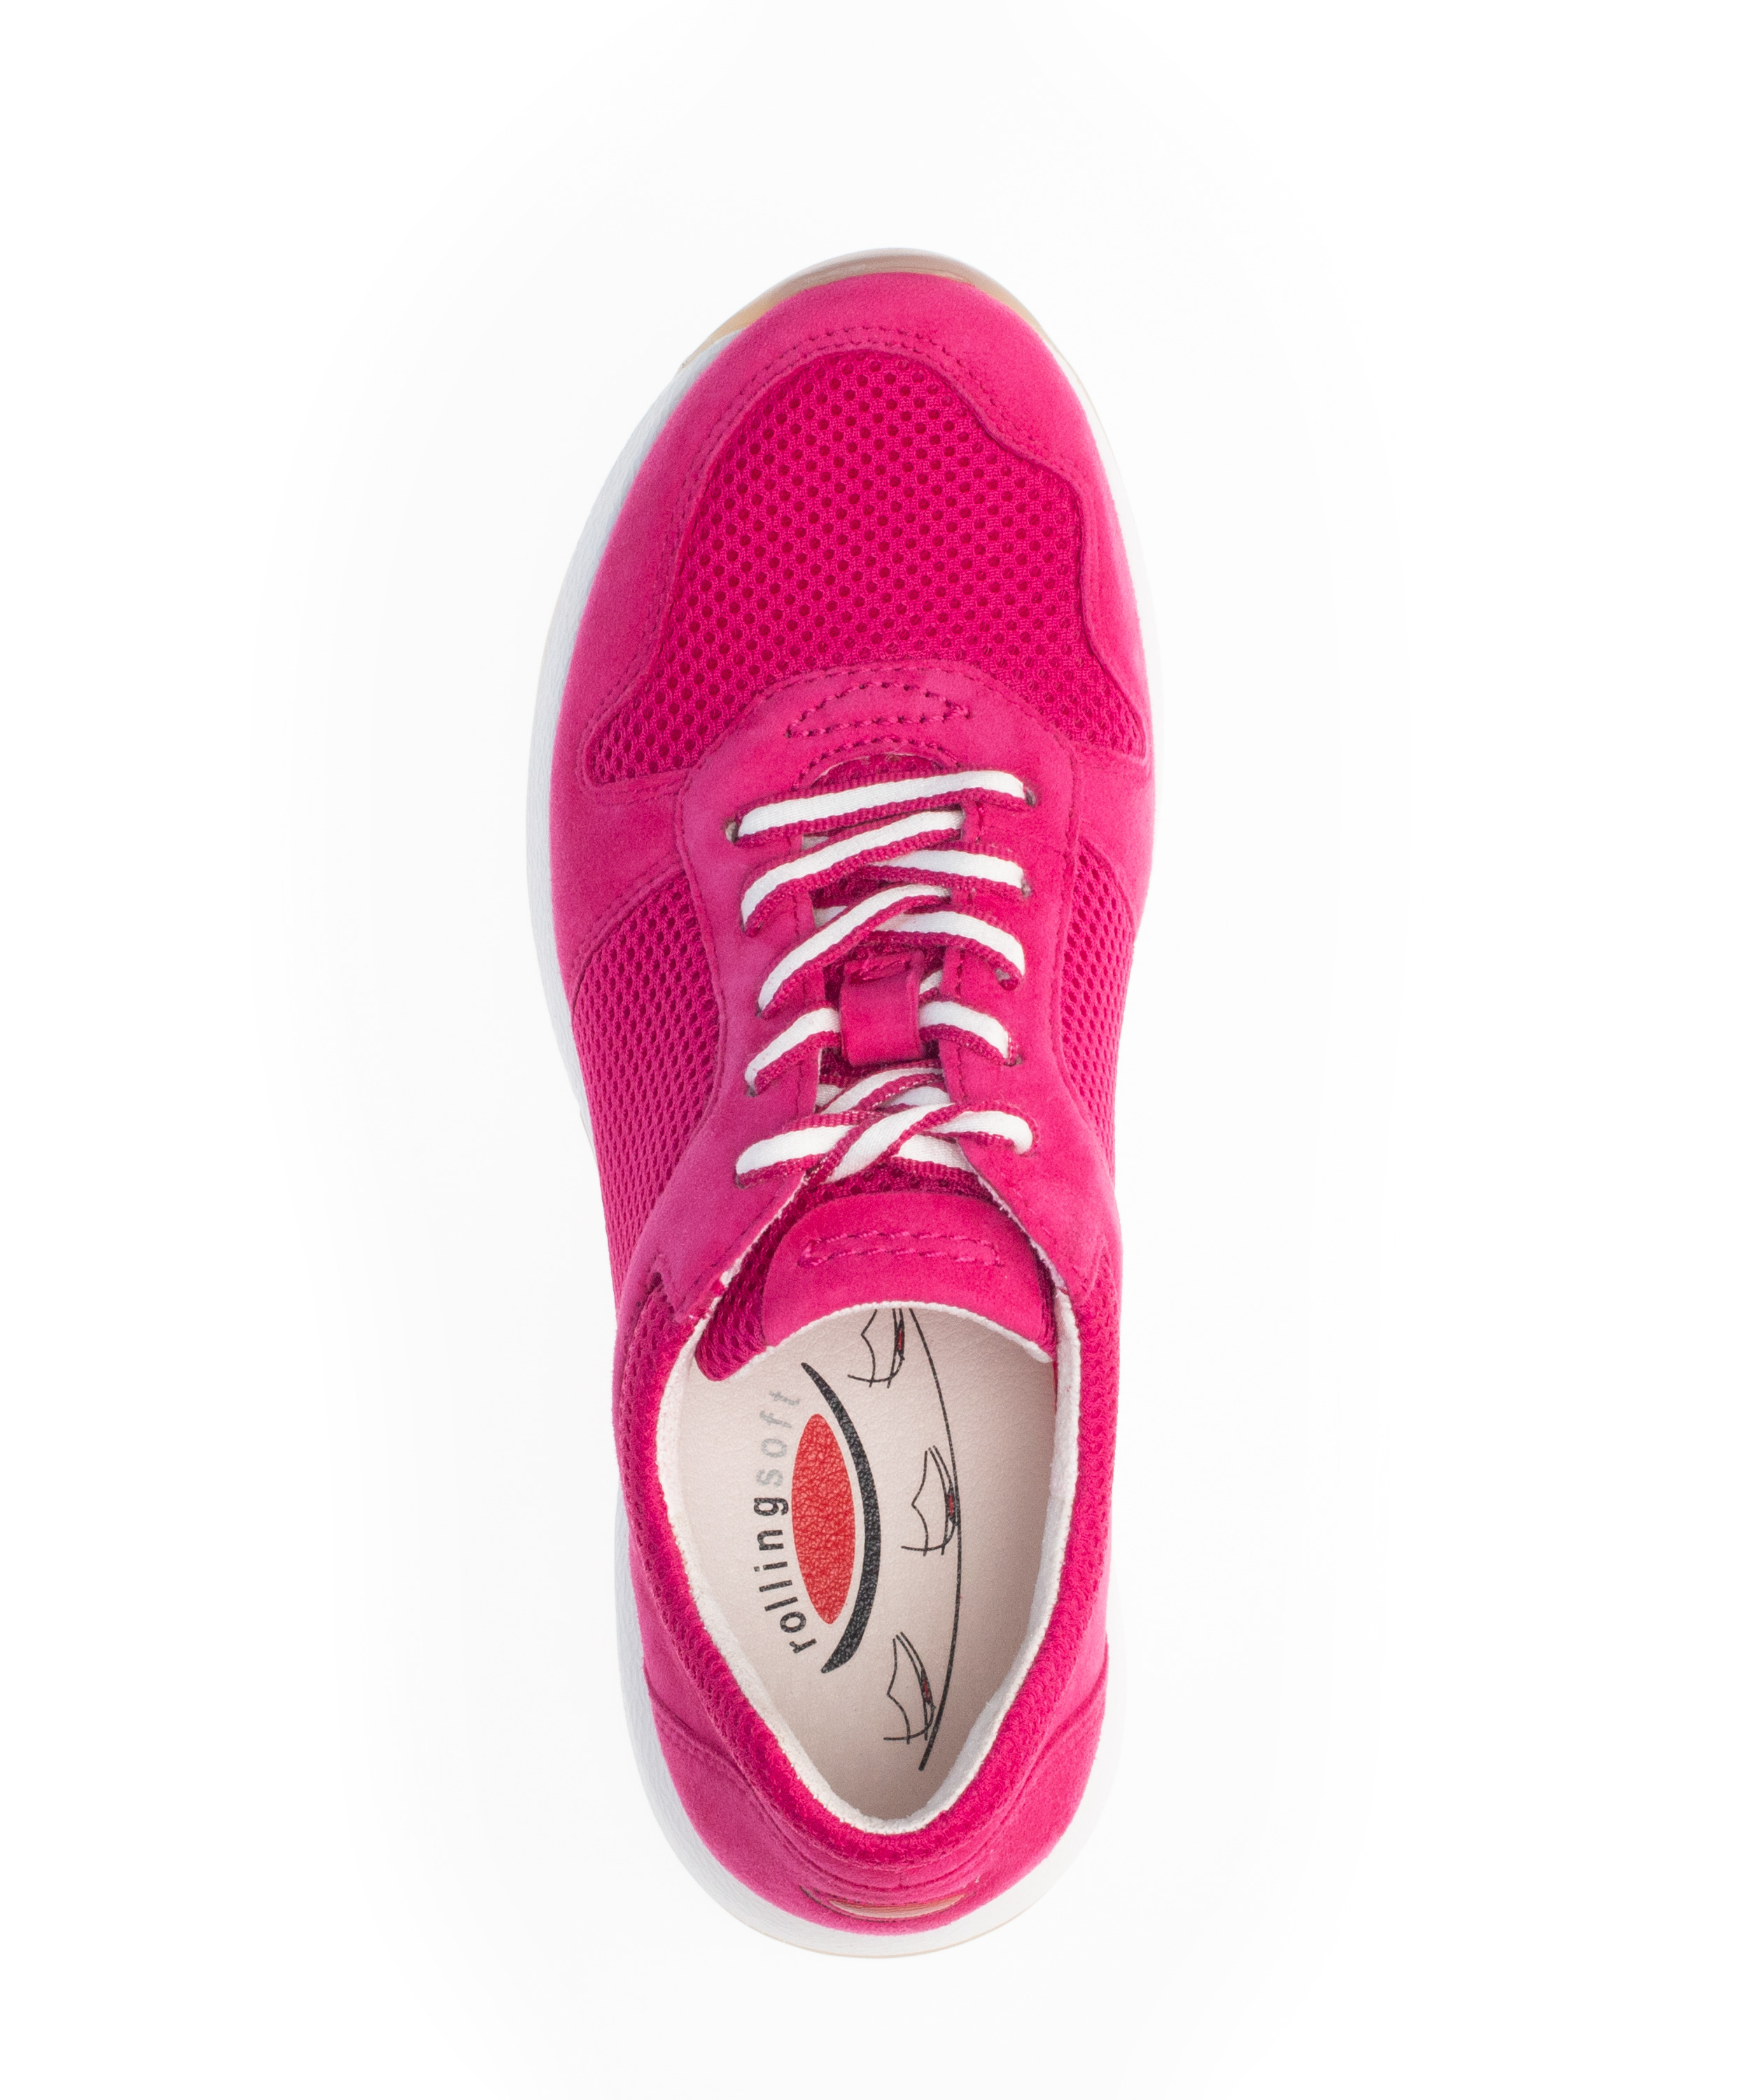 Gabor Comfort Sneaker - Fuxia Leder